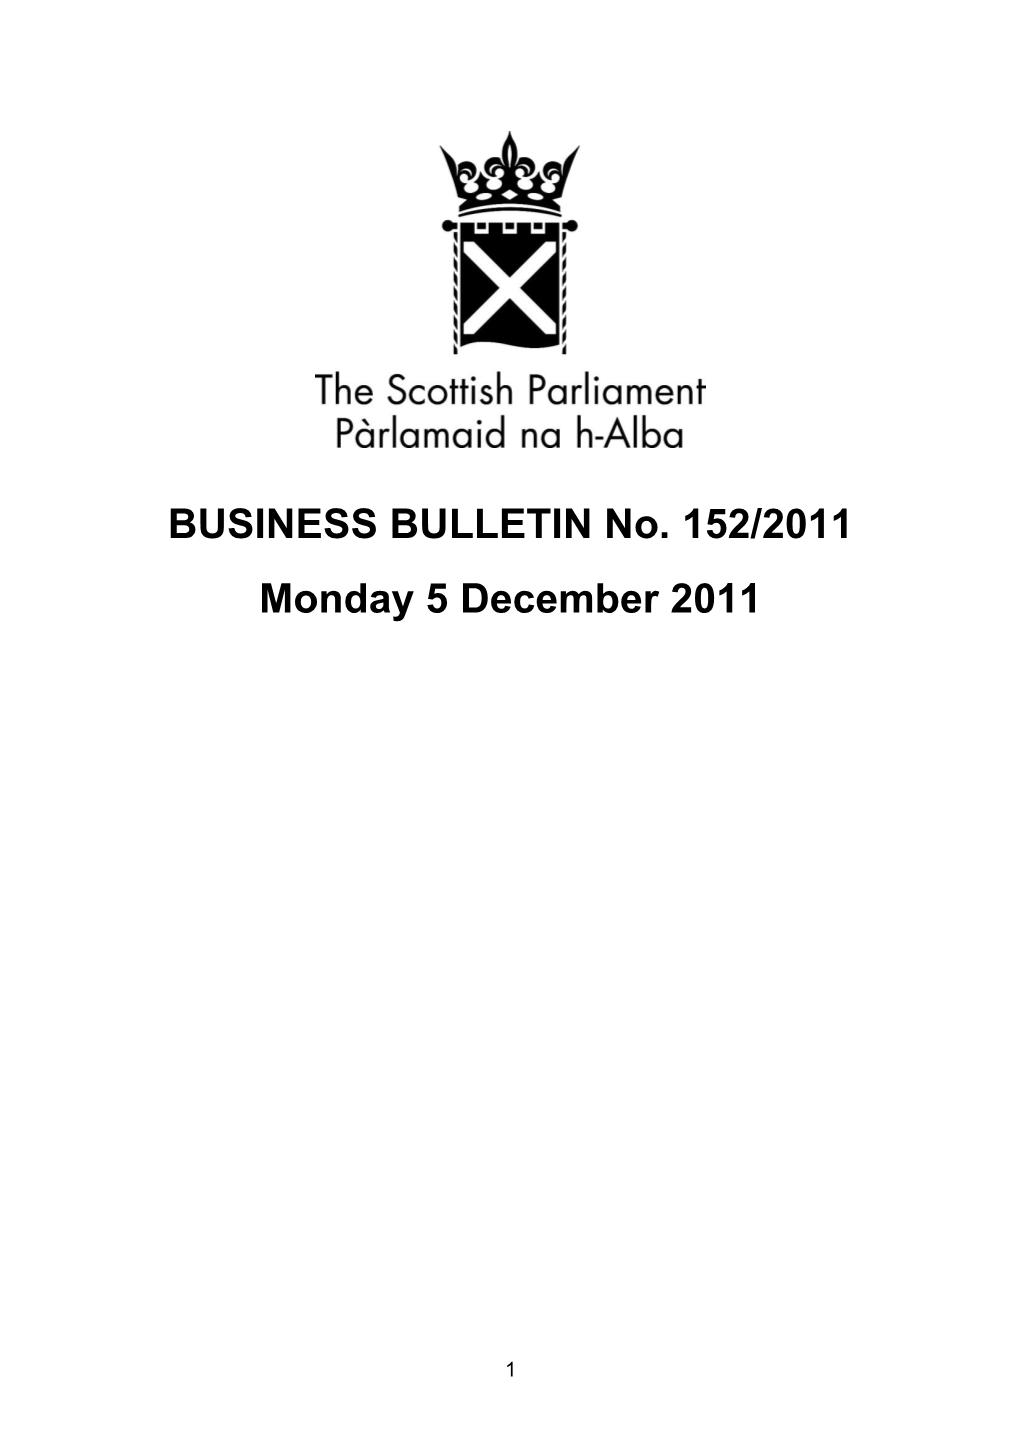 BUSINESS BULLETIN No. 152/2011 Monday 5 December 2011